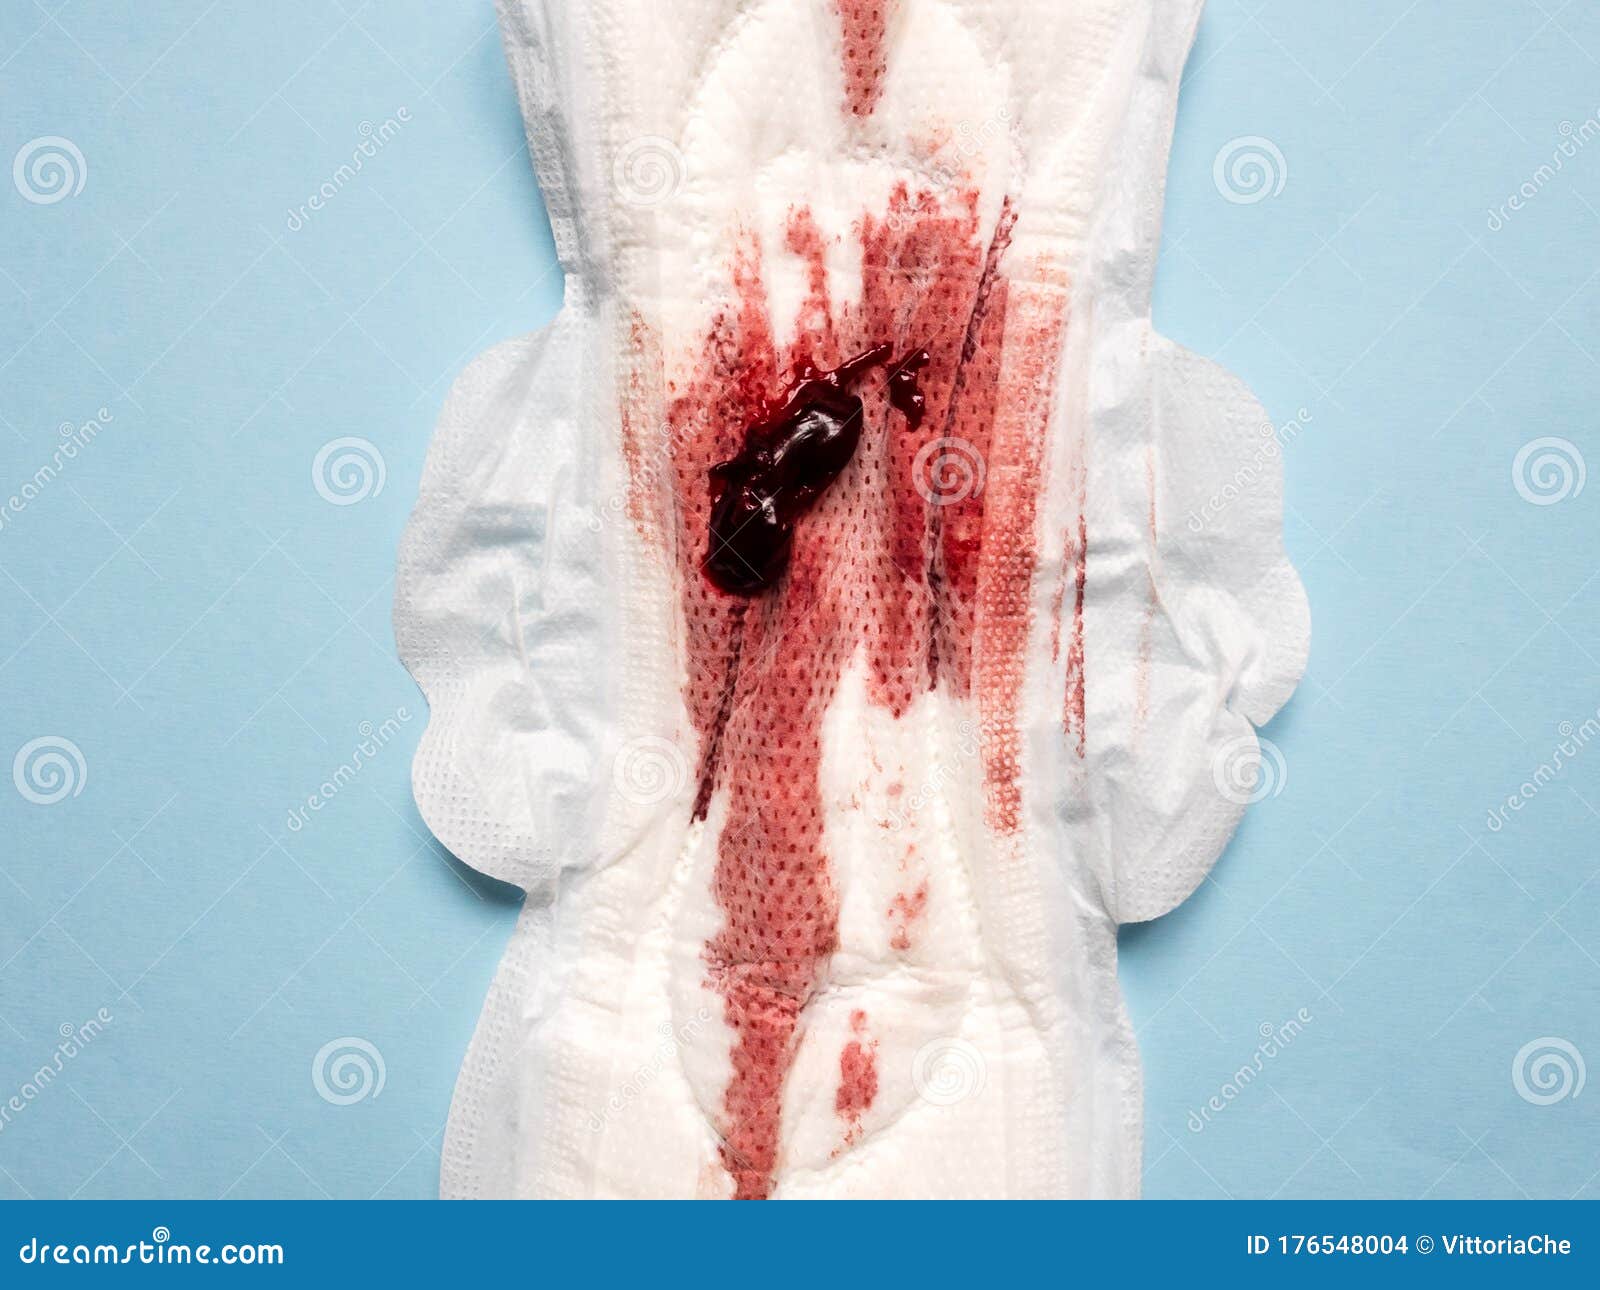 https://thumbs.dreamstime.com/z/symptom-endometriosis-menstrual-blood-clots-sanitary-pad-close-up-image-176548004.jpg